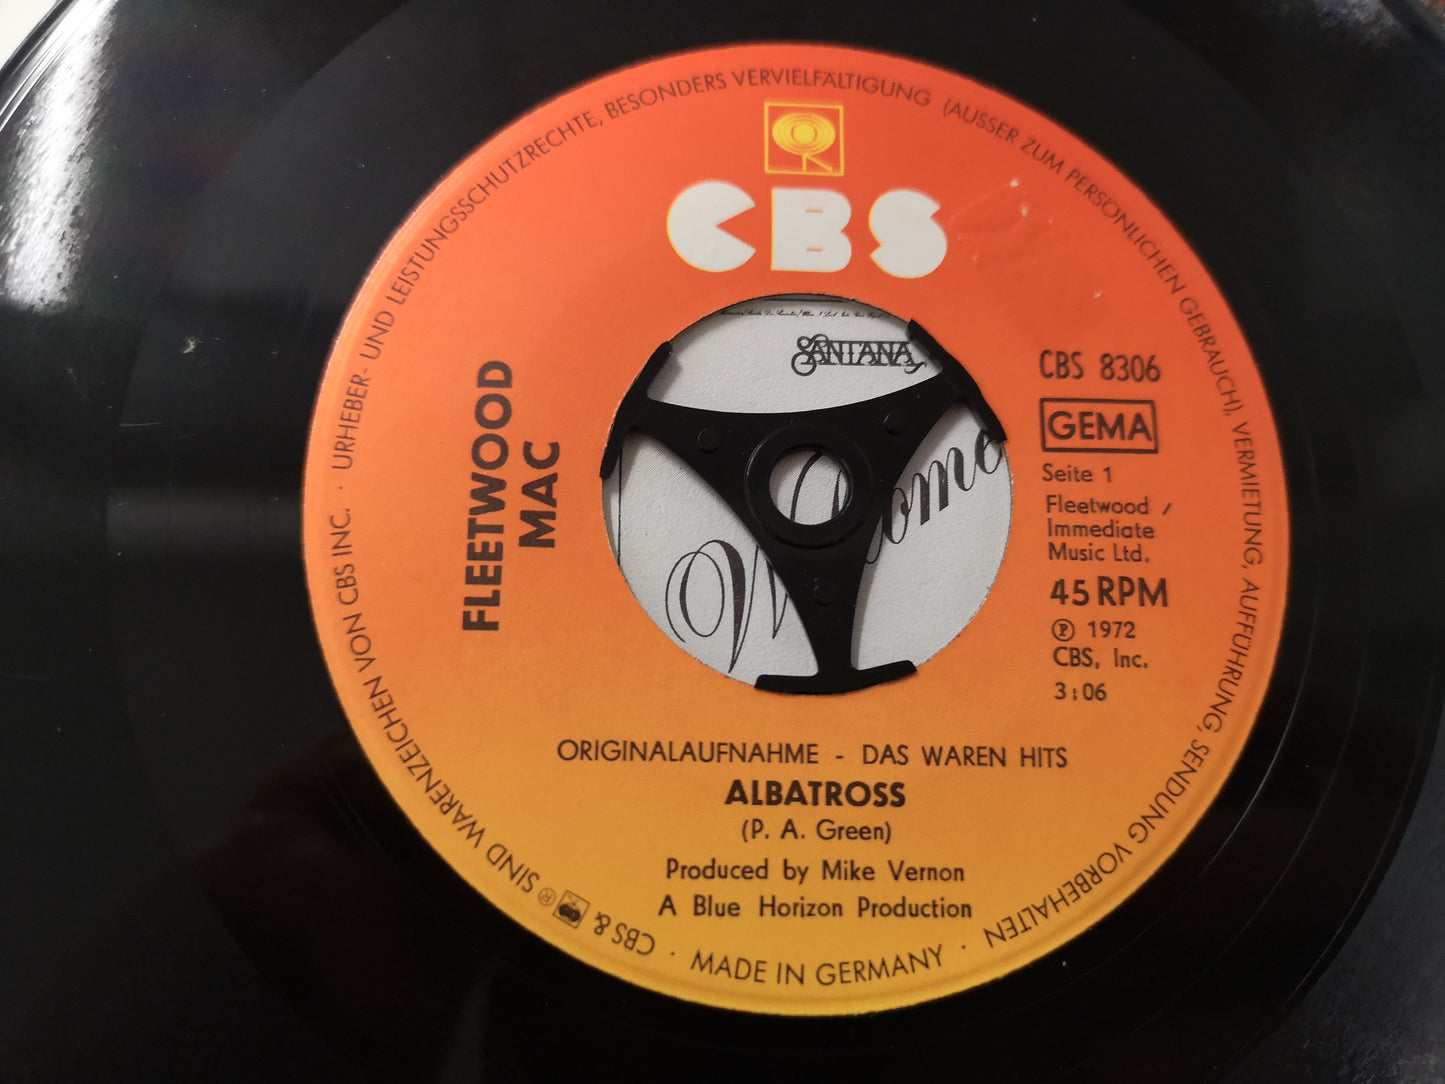 Fleetwood Mac "Albatross" Germany 1972 VG++/EX (7" Single)